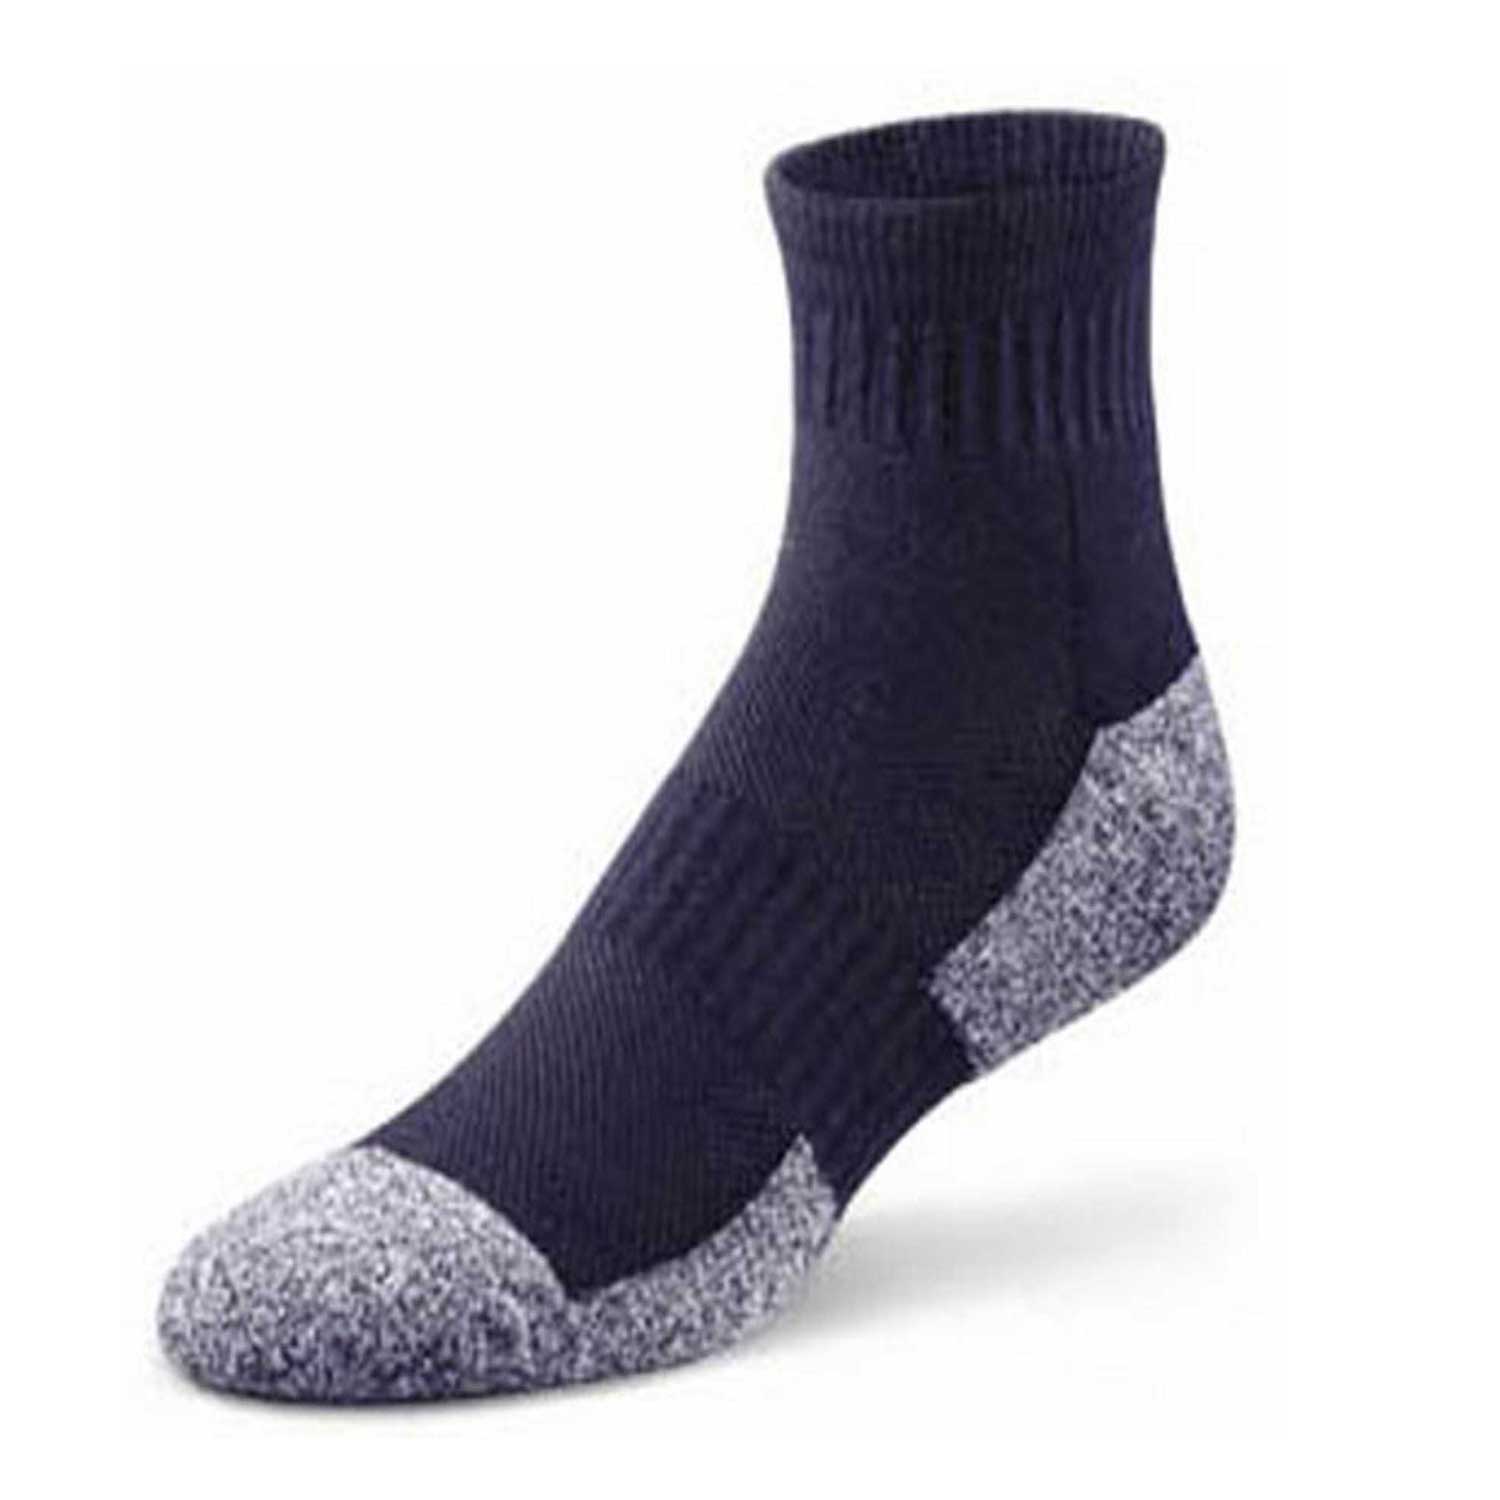 Dr. Comfort Ankle Socks (1 Pair) - Men's Therapeutic Diabetic Socks - Athletic, Casual, Dress